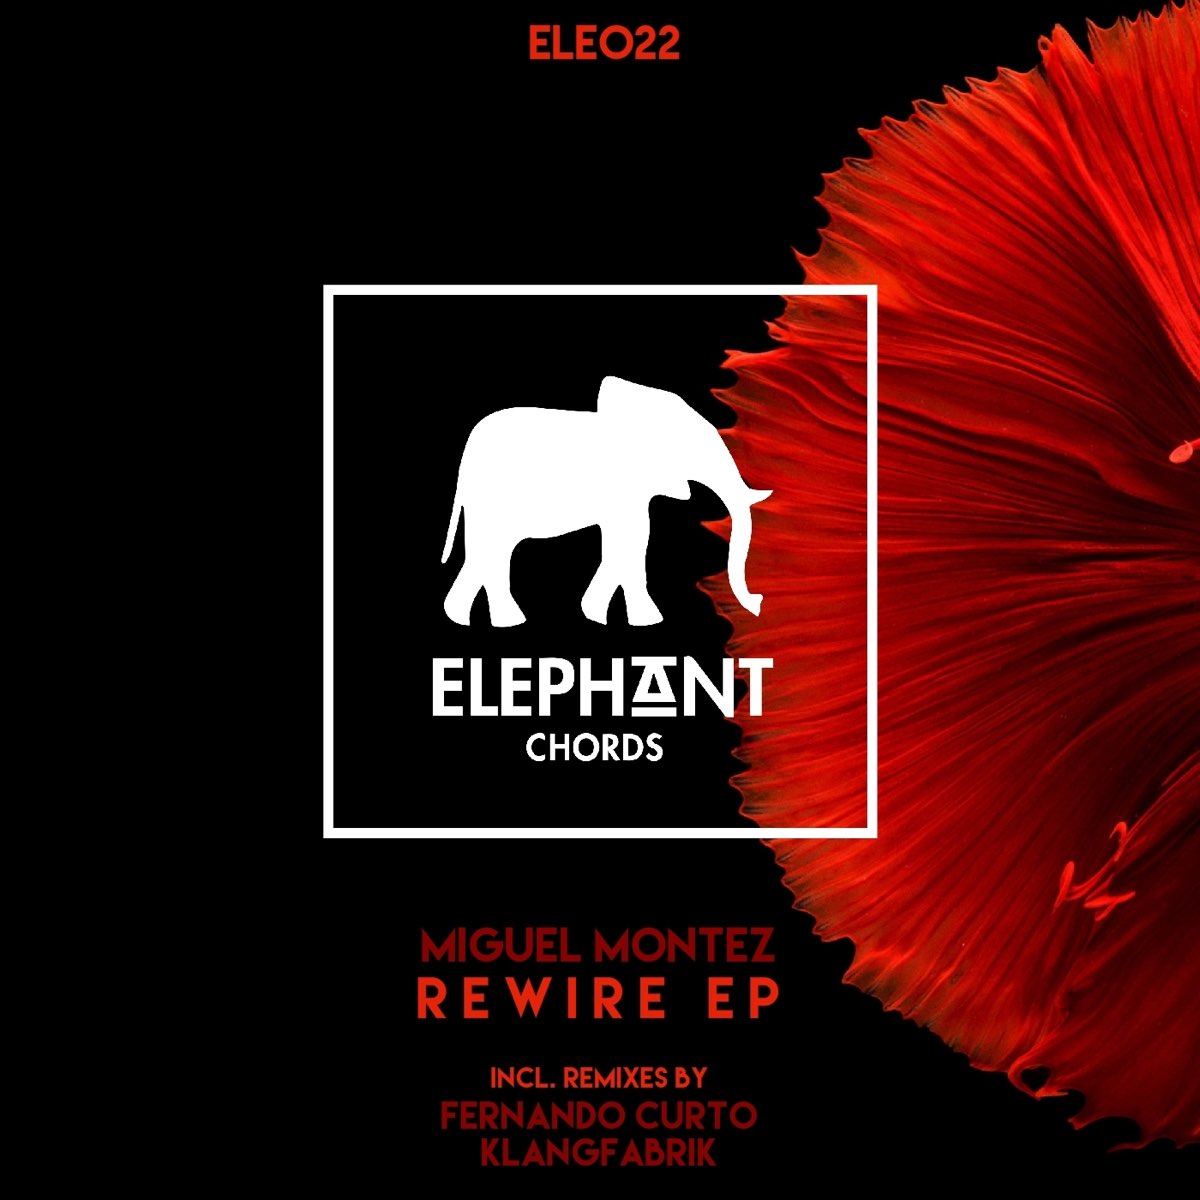 Remixed rewired (2008, бутлег). Ultra feat DJ rewired - я забуду тебя (Remix).